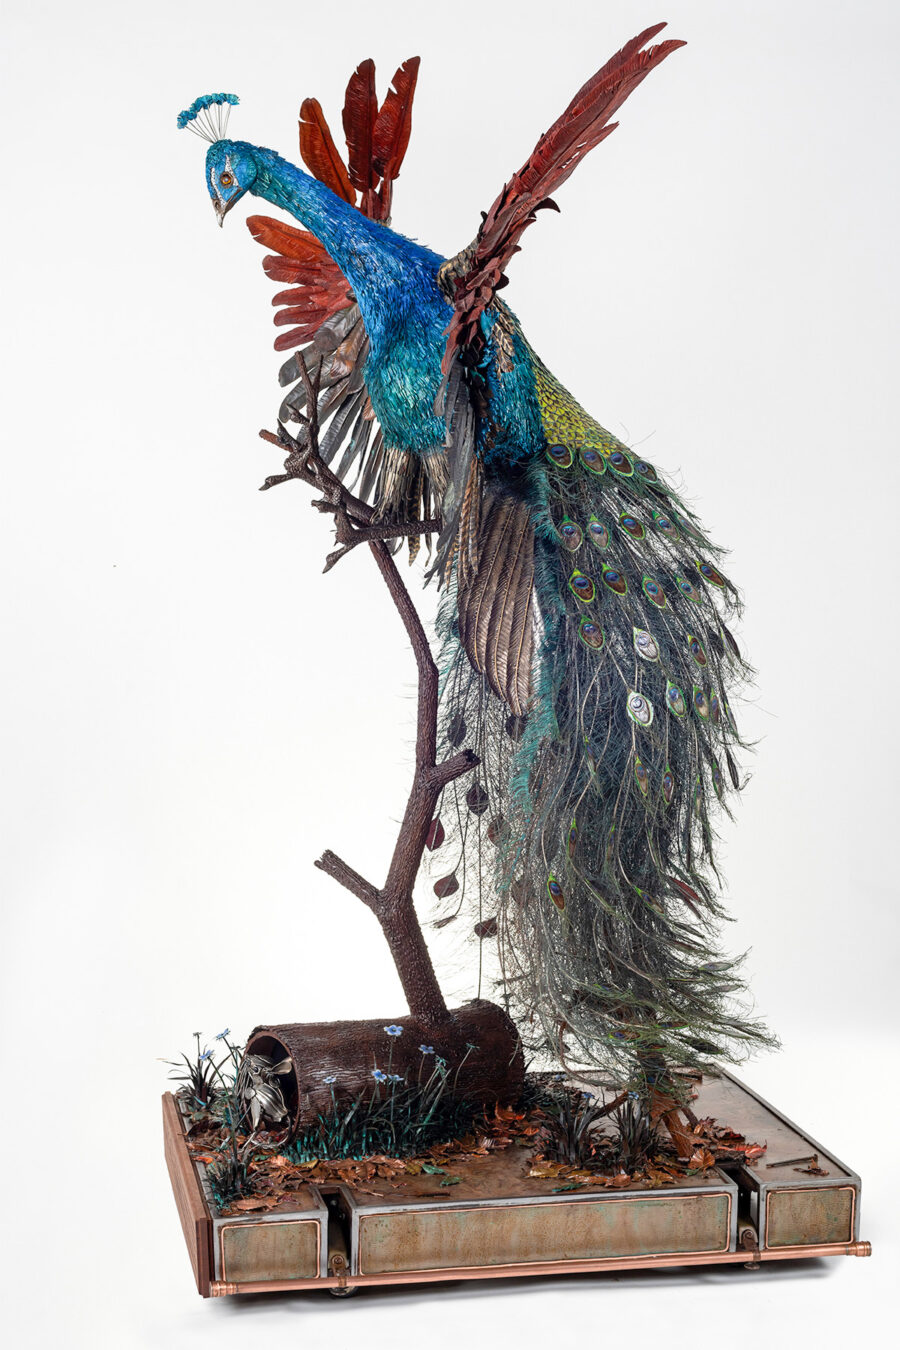 Peacock Sculpture by Cindy Chinn - 16